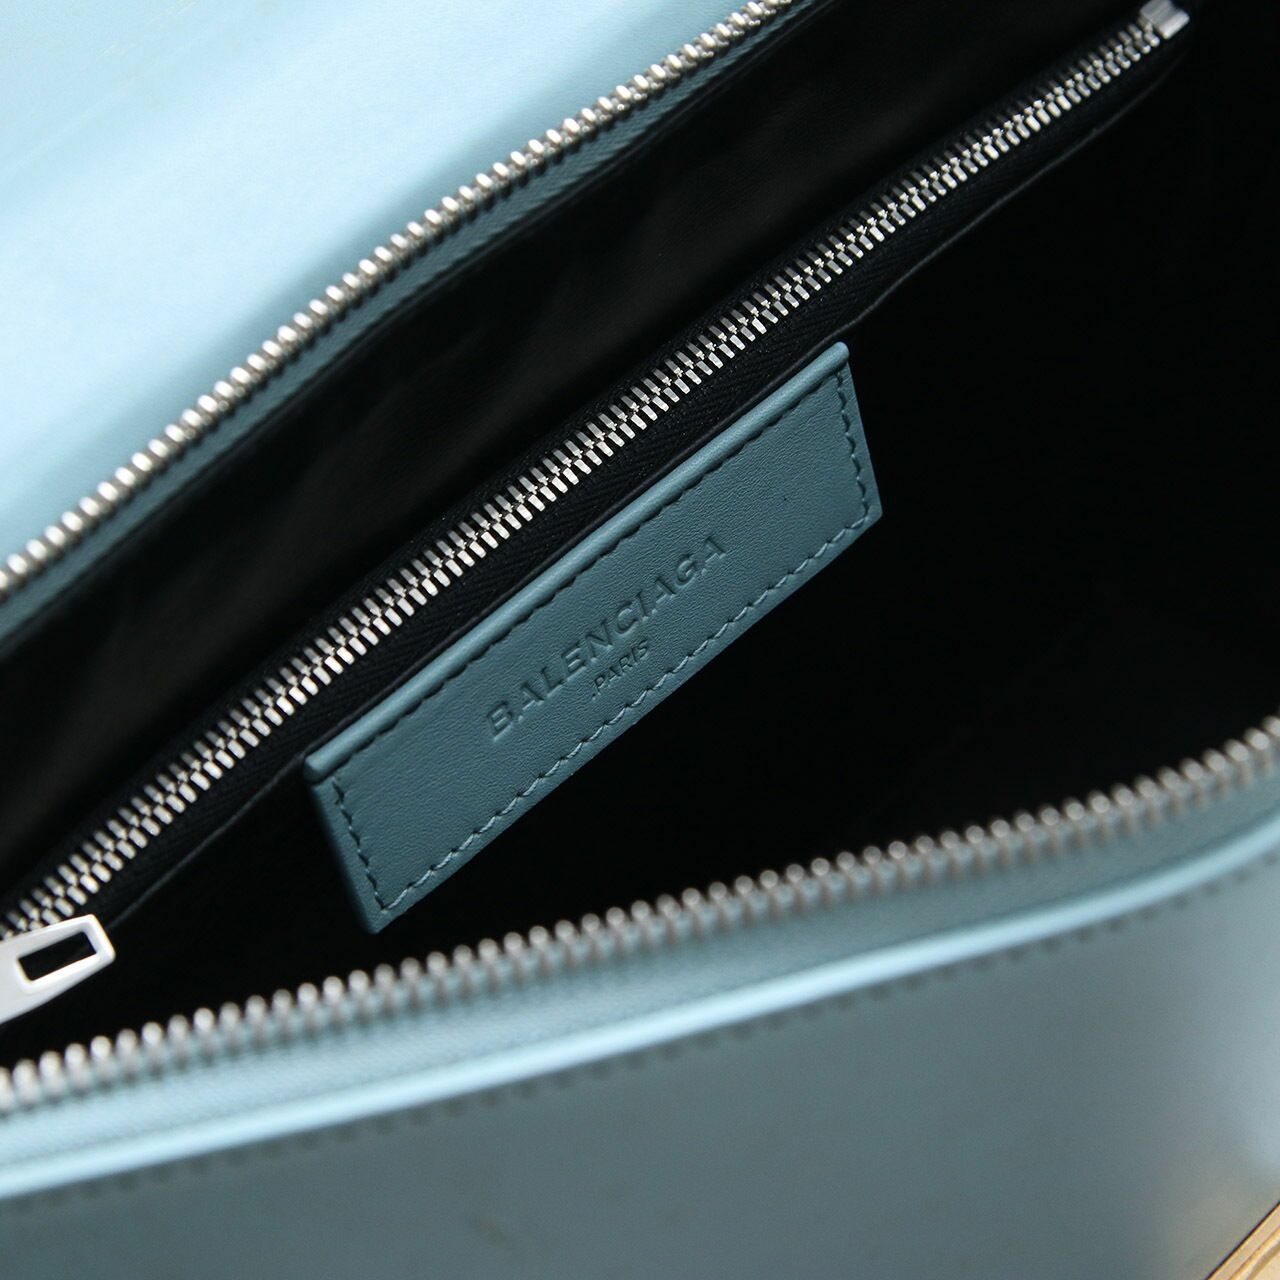 Balenciaga Le Dix Blue Leather Satchel Bag